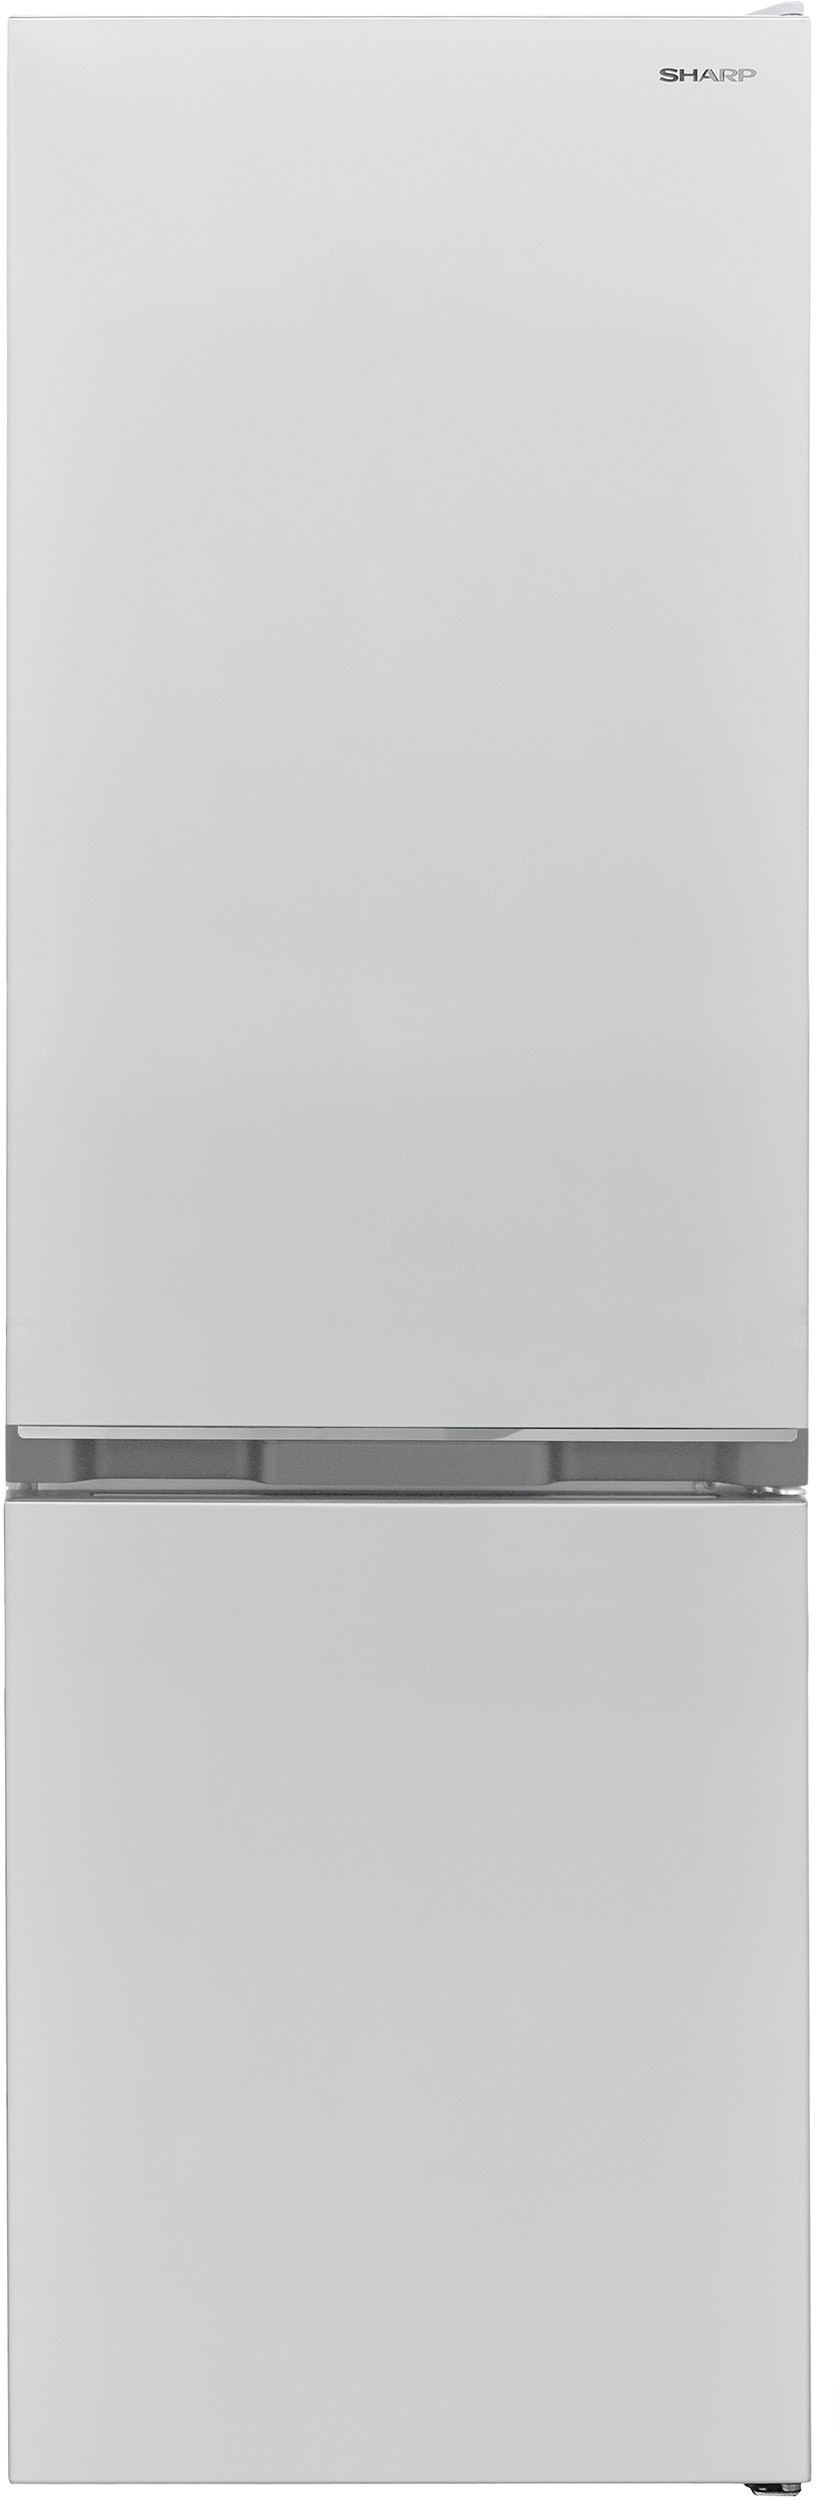 ELECTROLUX Réfrigérateur Frigo simple porte Inox 390L Air Brassé